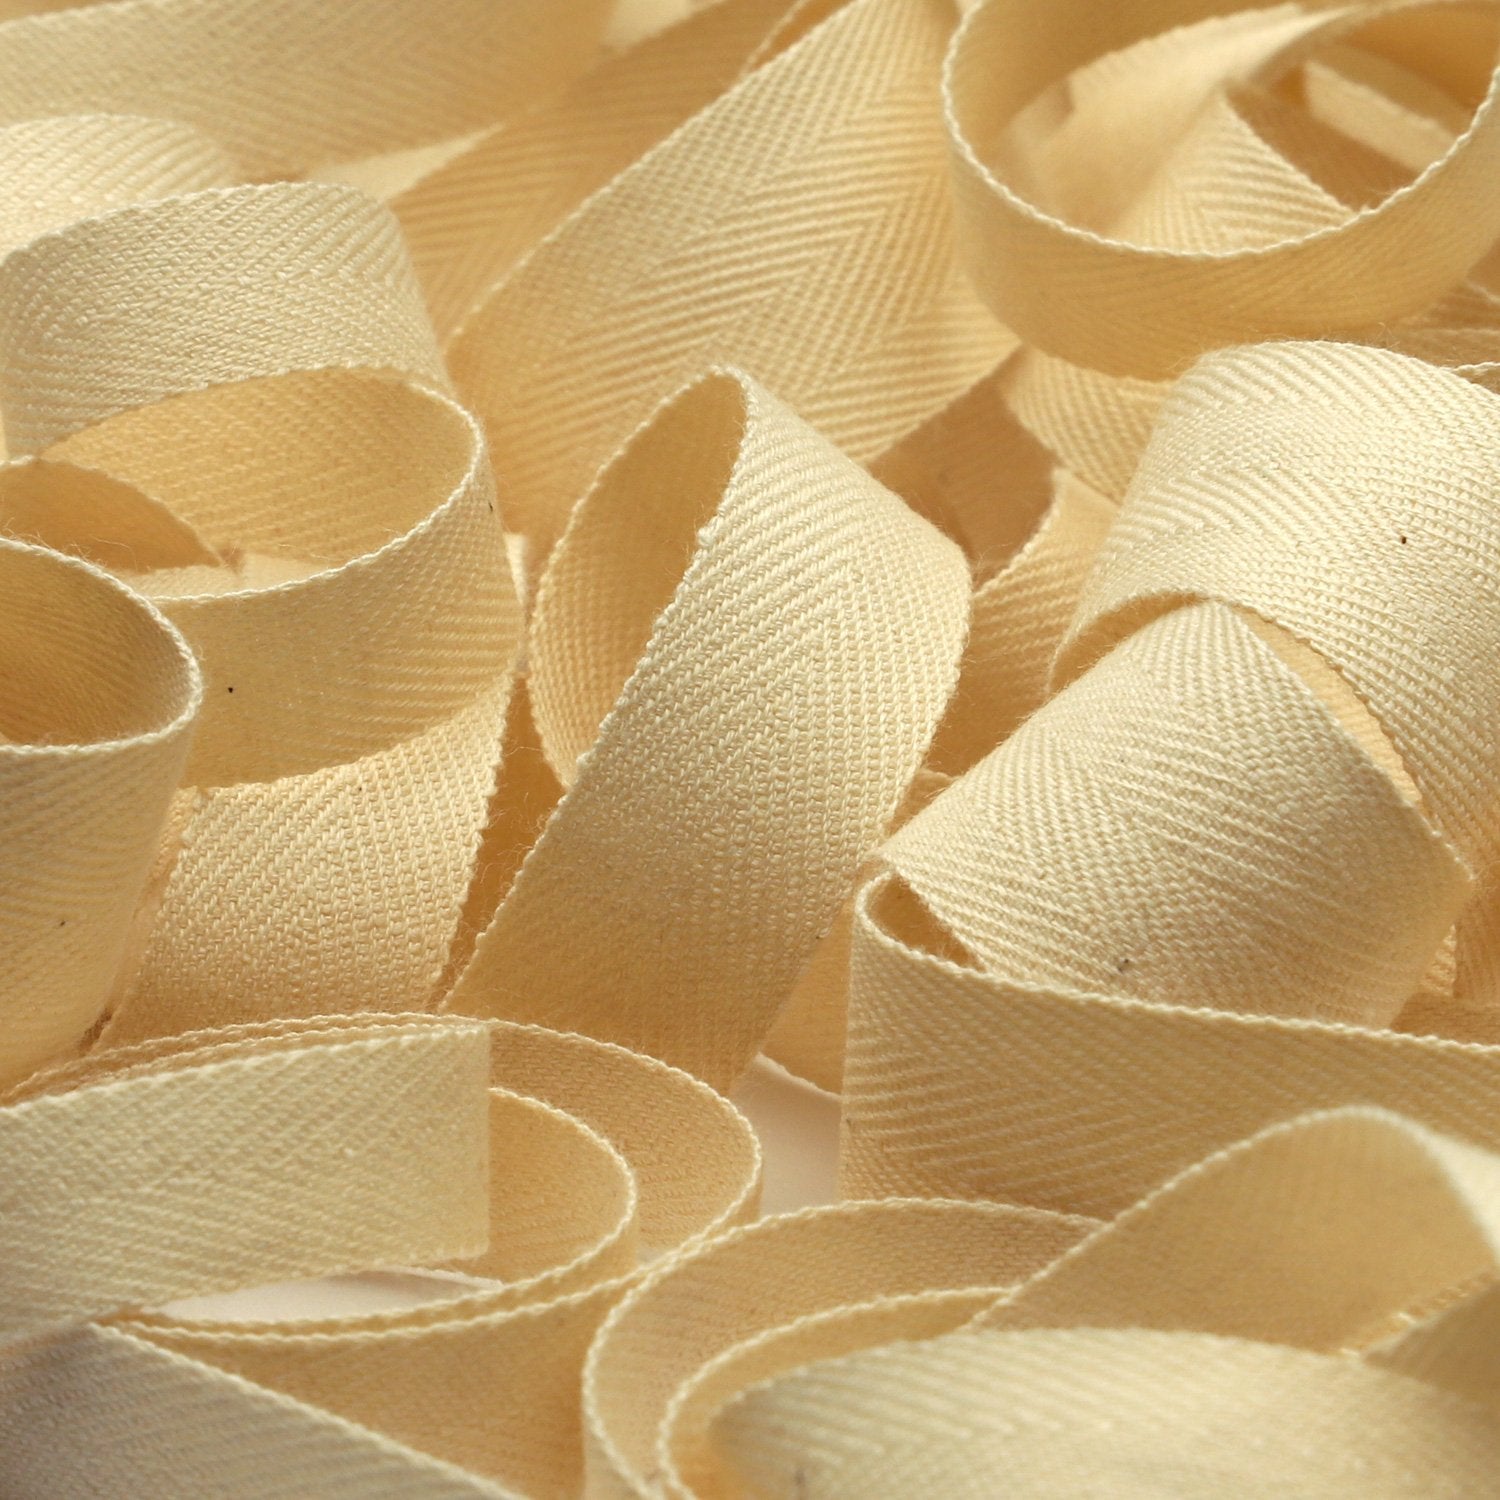 FUJIYAMA RIBBON Organic Cotton Herringbone Ribbon 12mm Ecru 9.14 Meters Roll